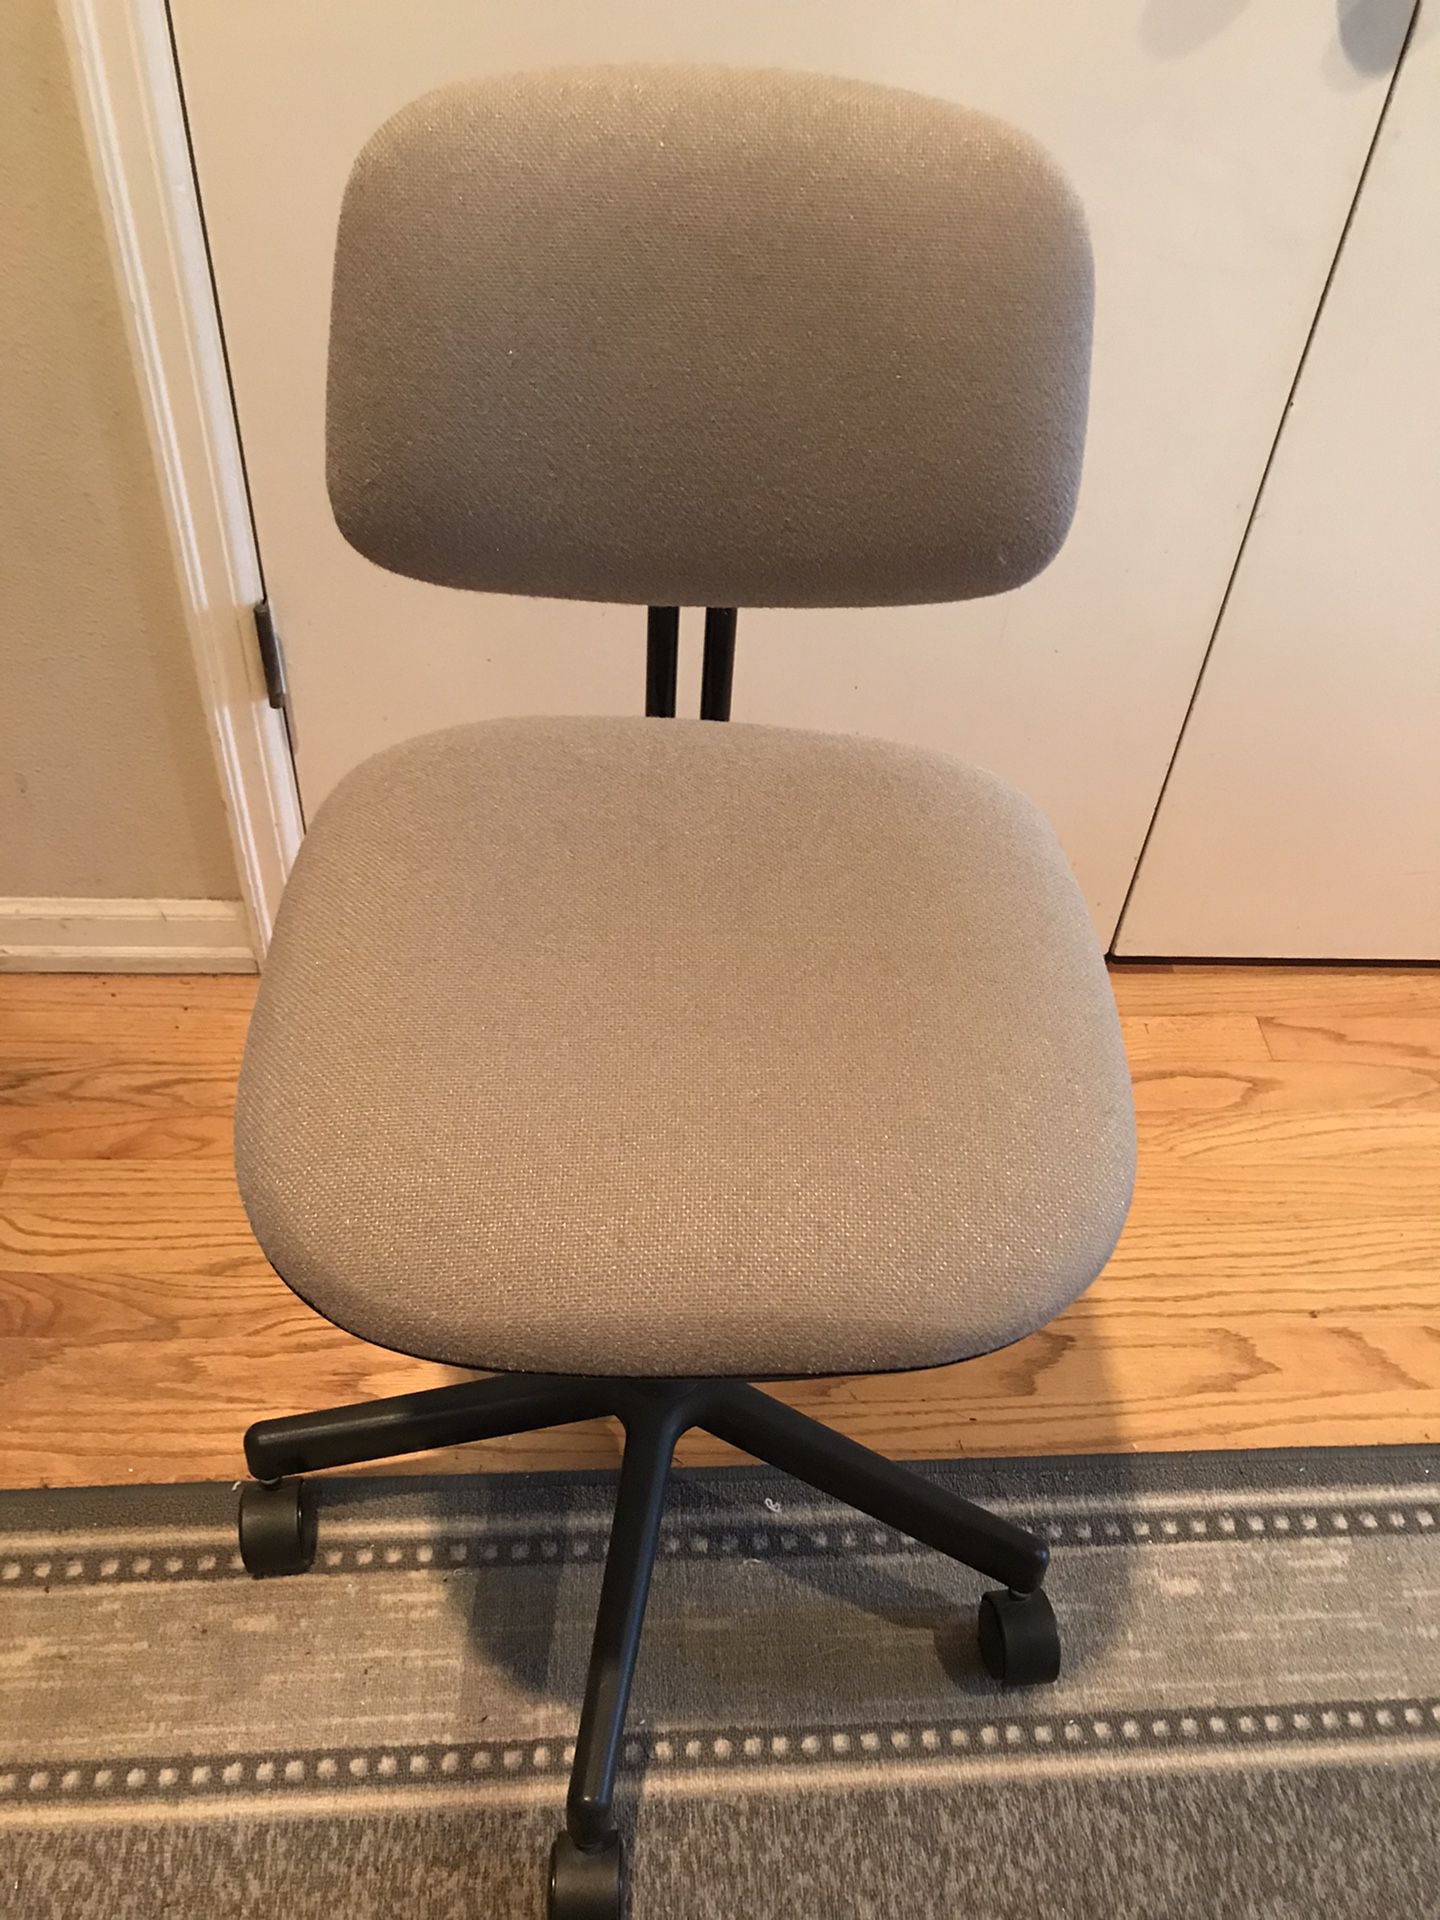 Office/desk chair adjustable